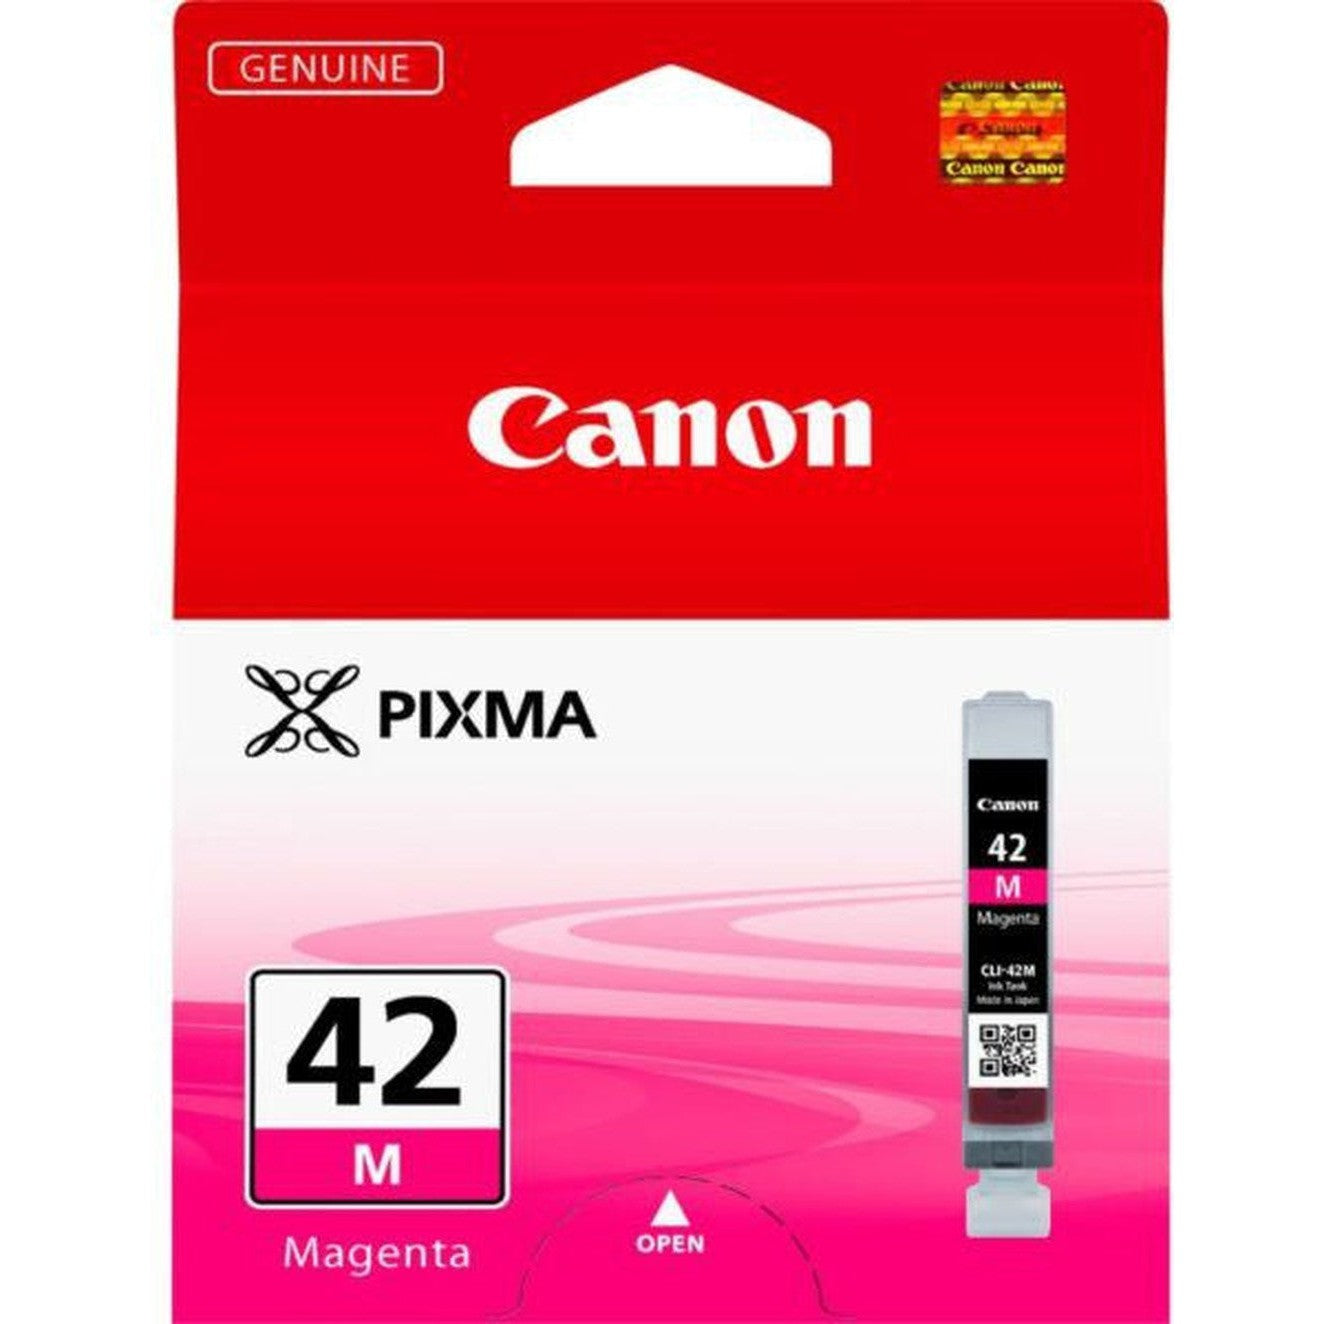 Canon 42 Magenta Cartridge-Inks And Toners-Canon-Star Light Kuwait